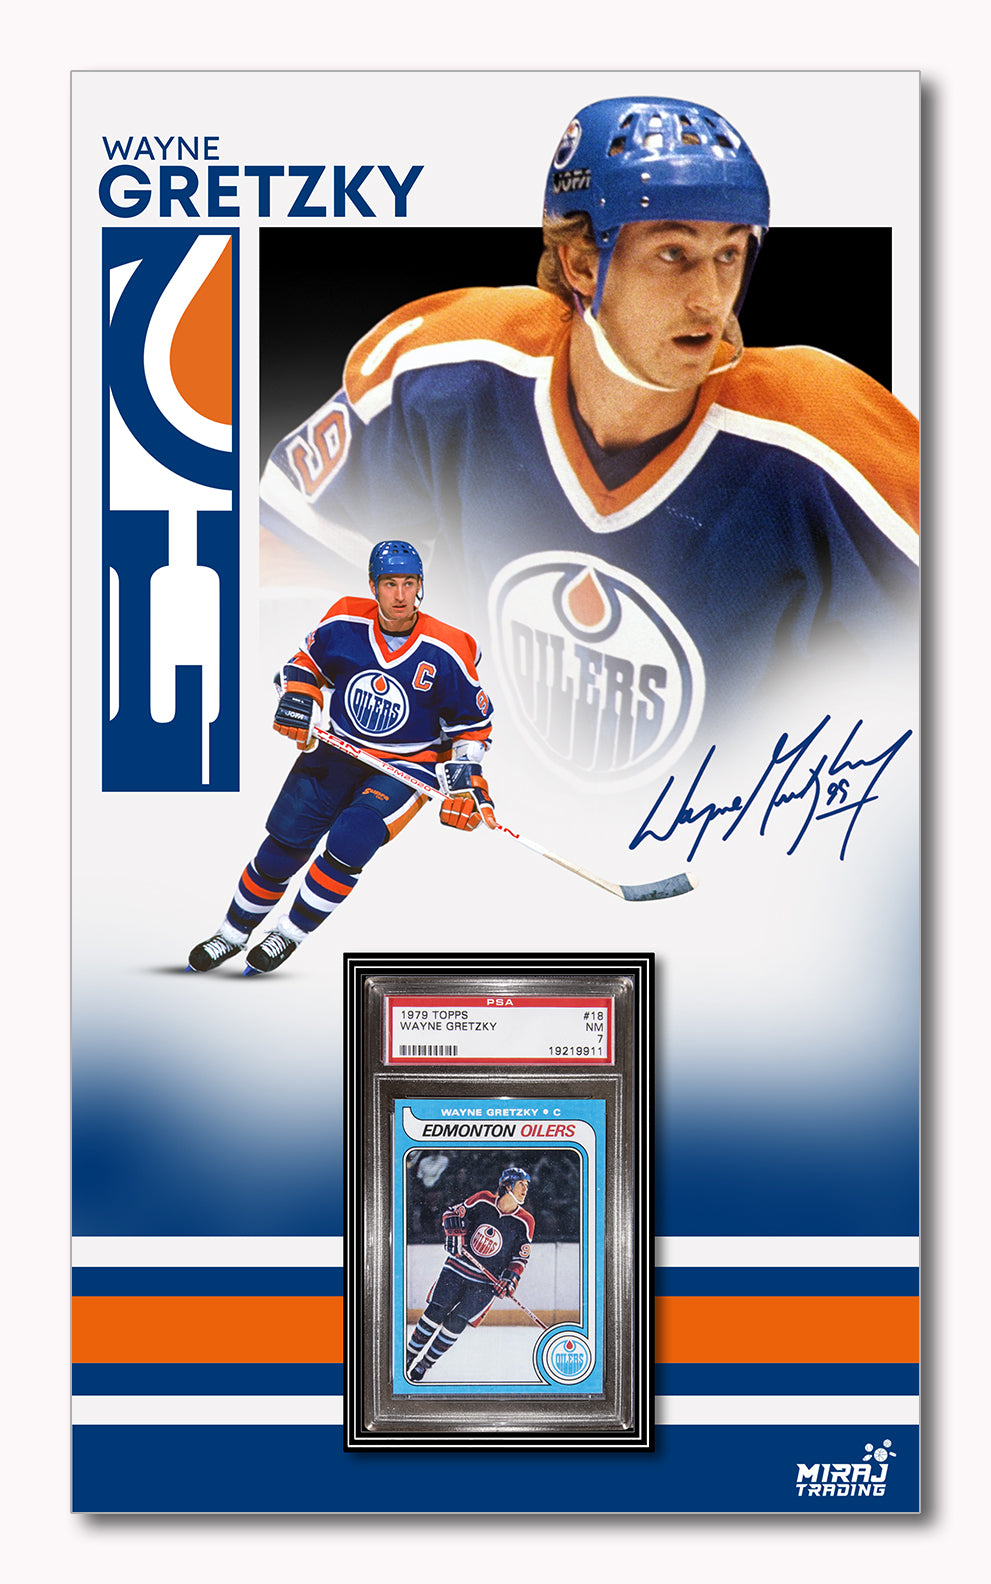 Wayne Gretzky - Miraj Card Frame - Miraj Trading